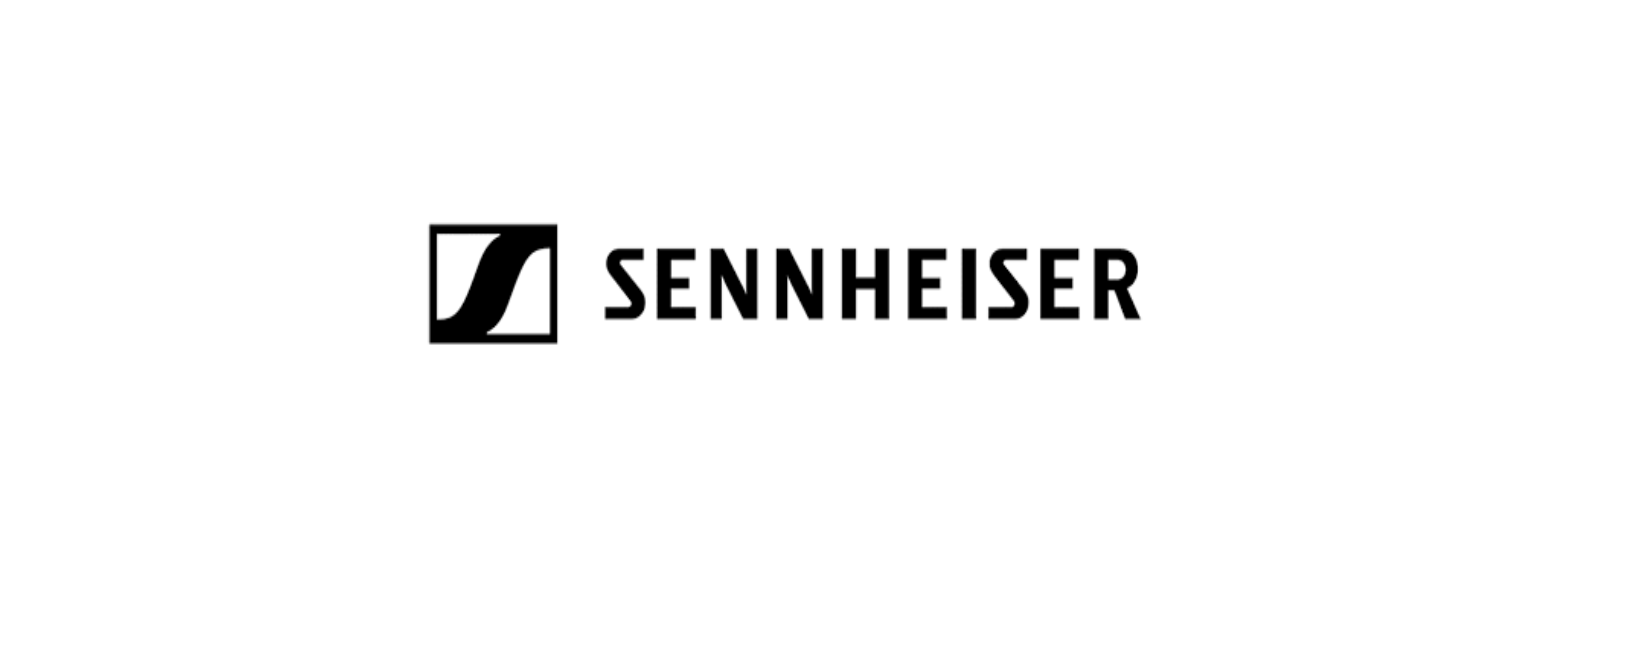 Sennheiser Discount Code 2022